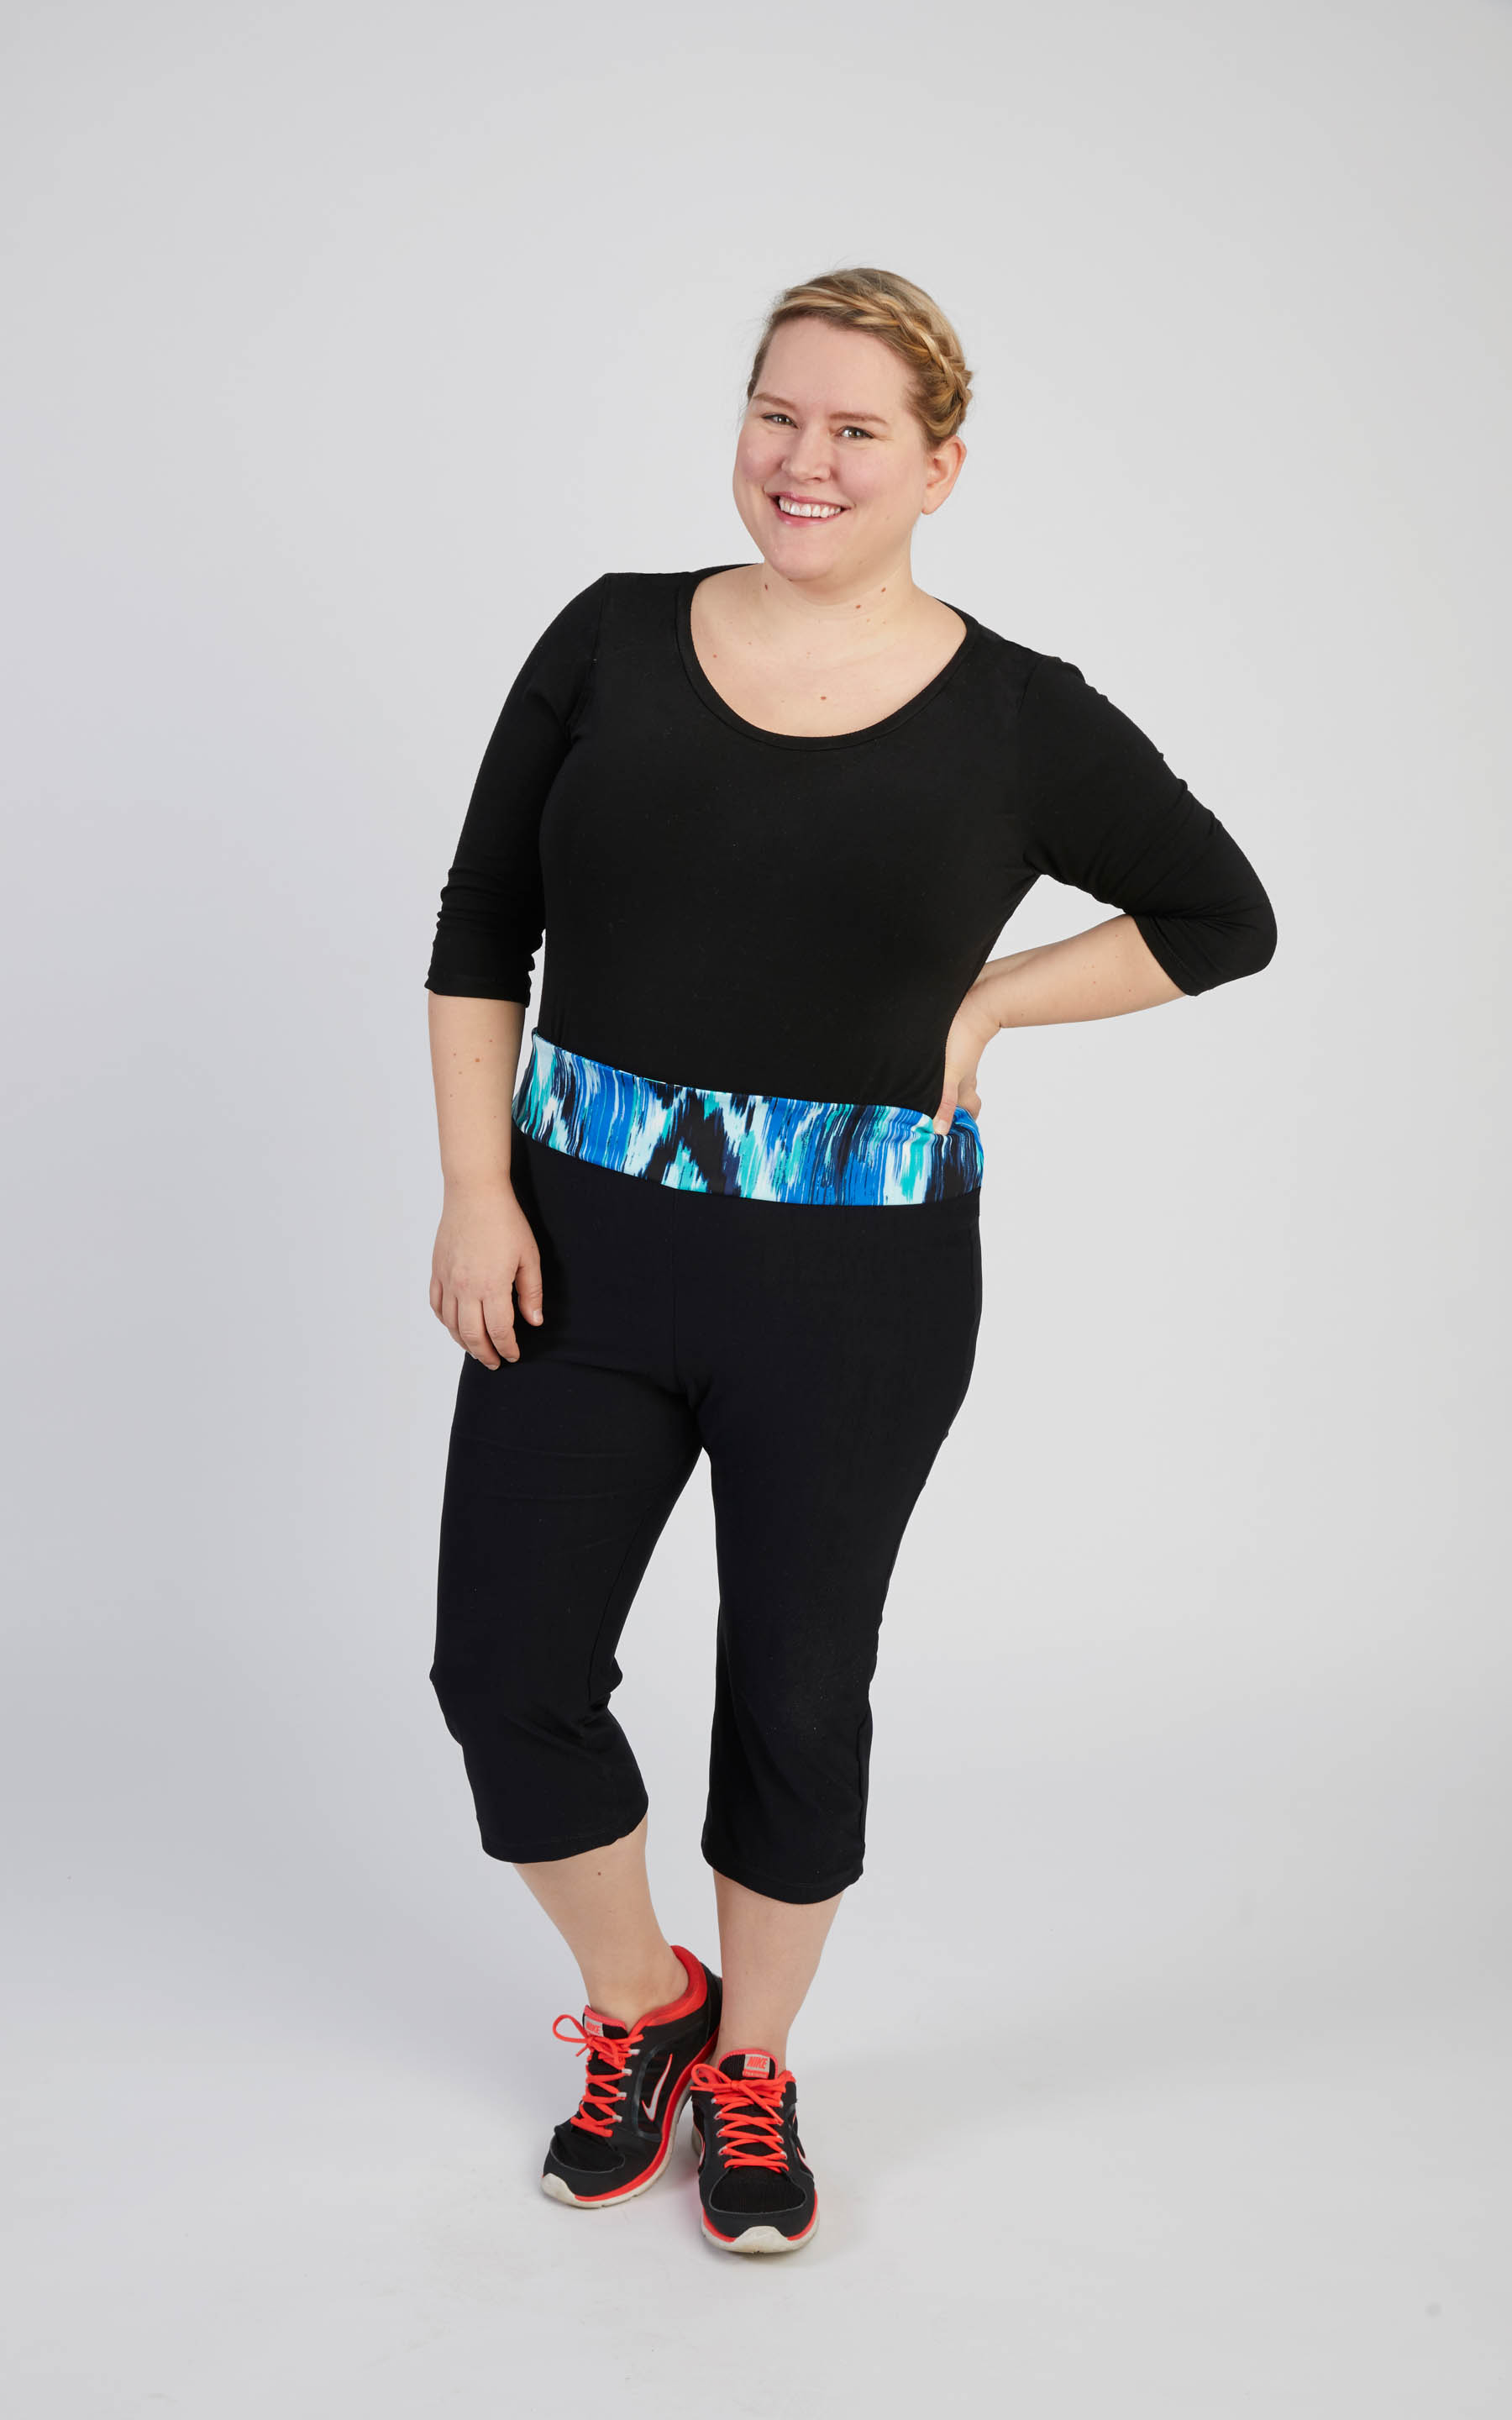 Belmont Yoga Pants plus size activewear sewing pattern